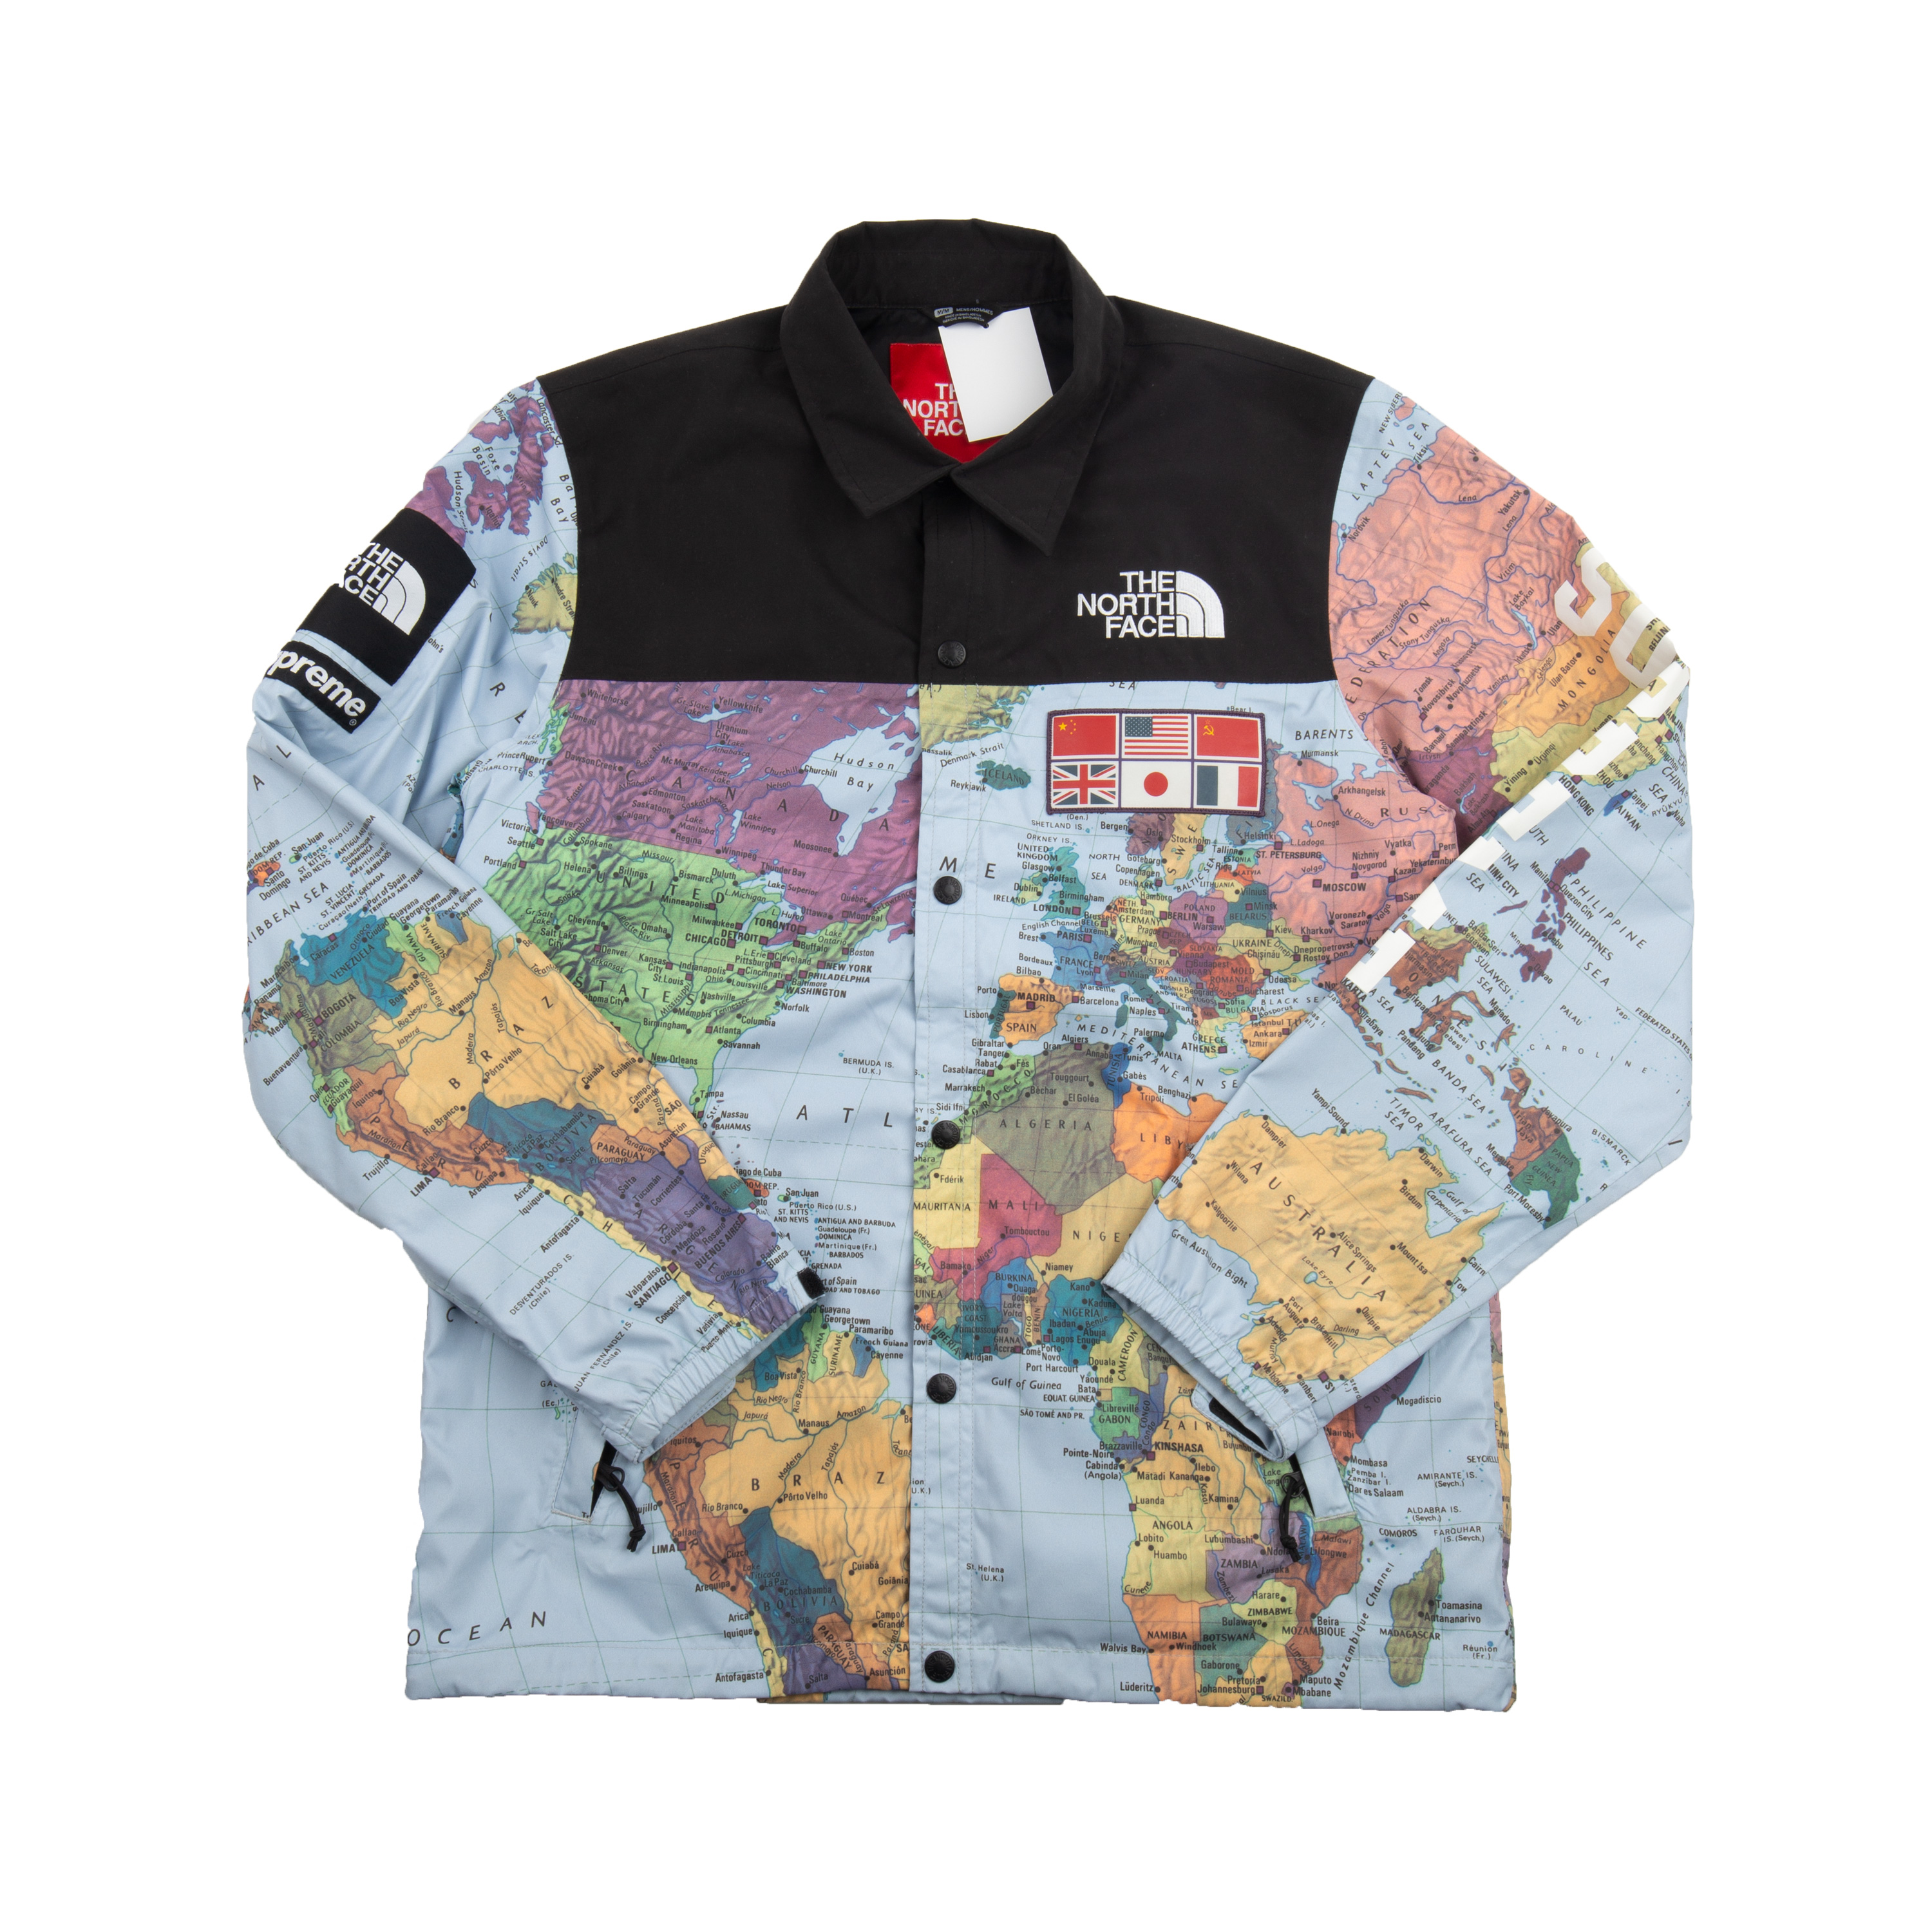 tnf x supreme world map jacket